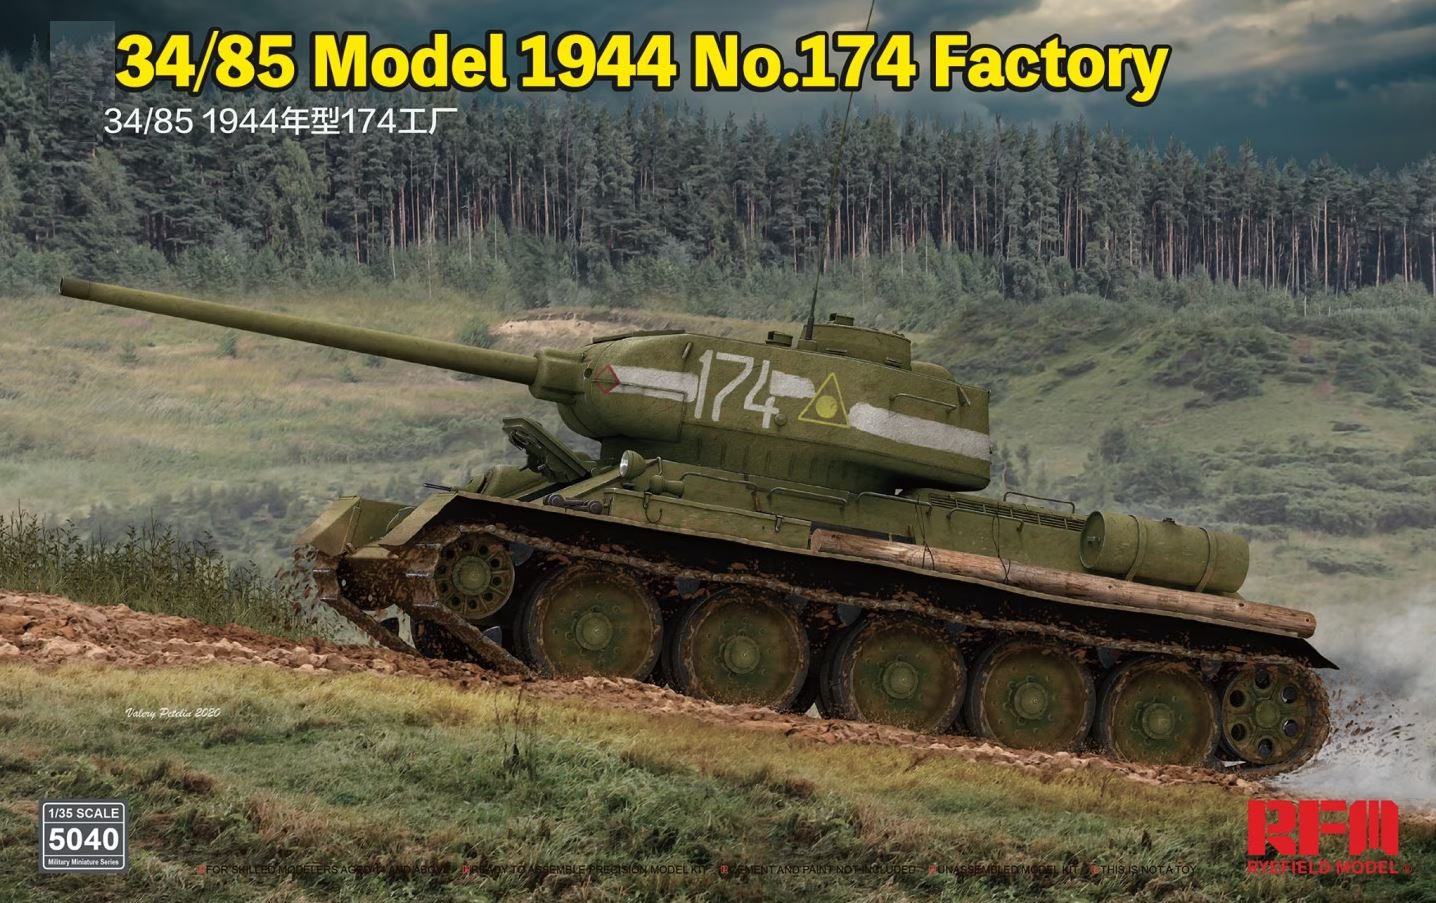 RM-5040  техника и вооружение  Танк-34/85 Model 1944 No.174 Factory  (1:35)